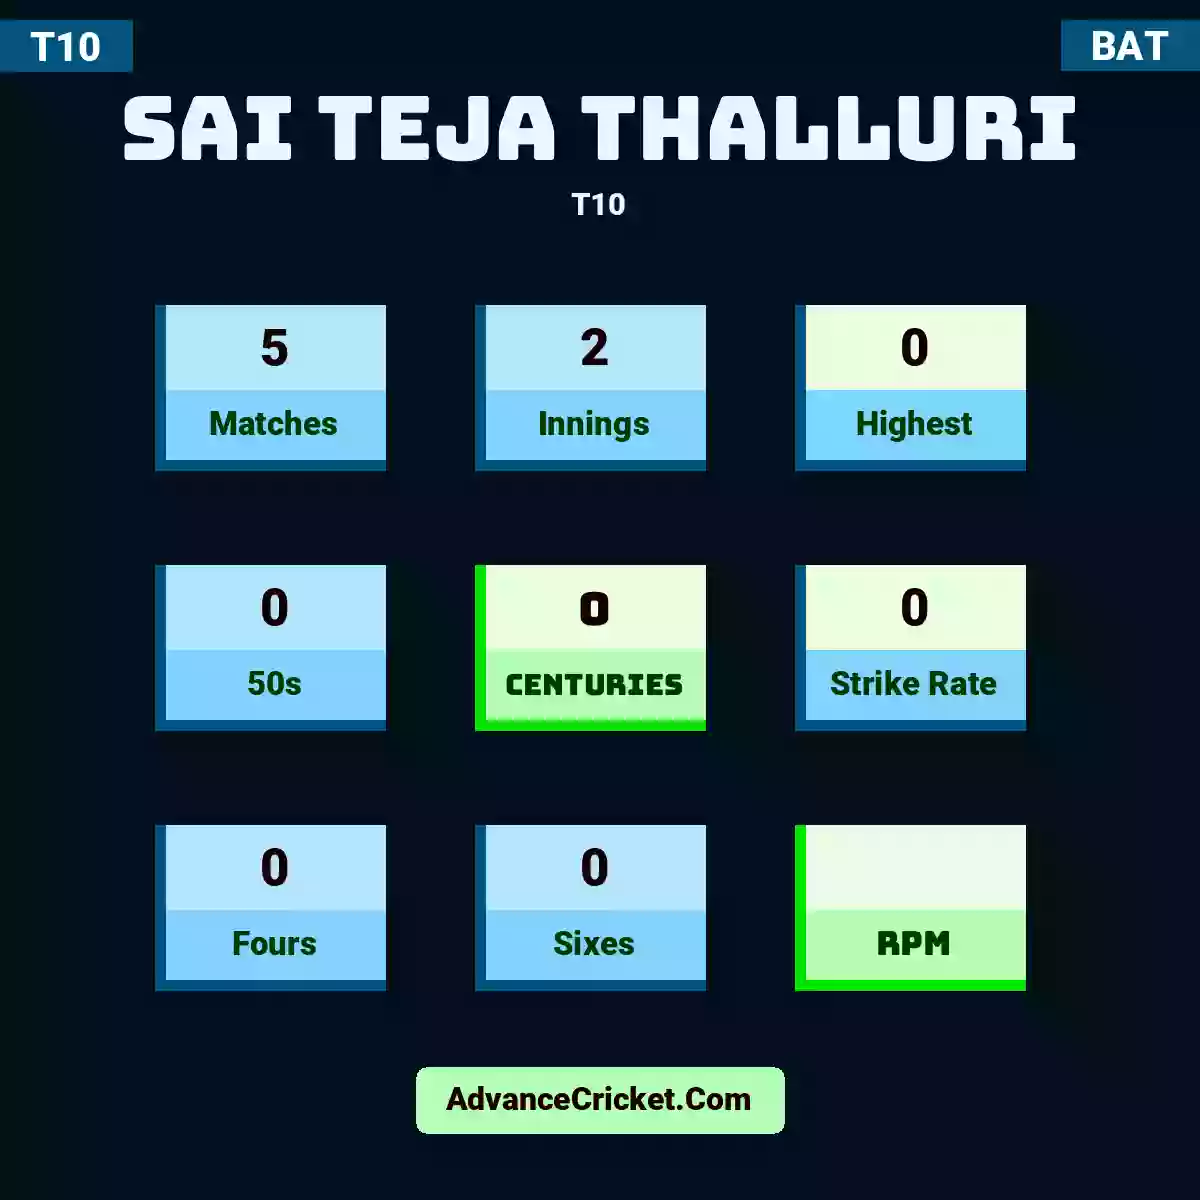 Sai Teja Thalluri T10 , Sai Teja Thalluri played 5 matches, scored 0 runs as highest, 0 half-centuries, and 0 centuries, with a strike rate of 0. S.Teja.Thalluri hit 0 fours and 0 sixes.